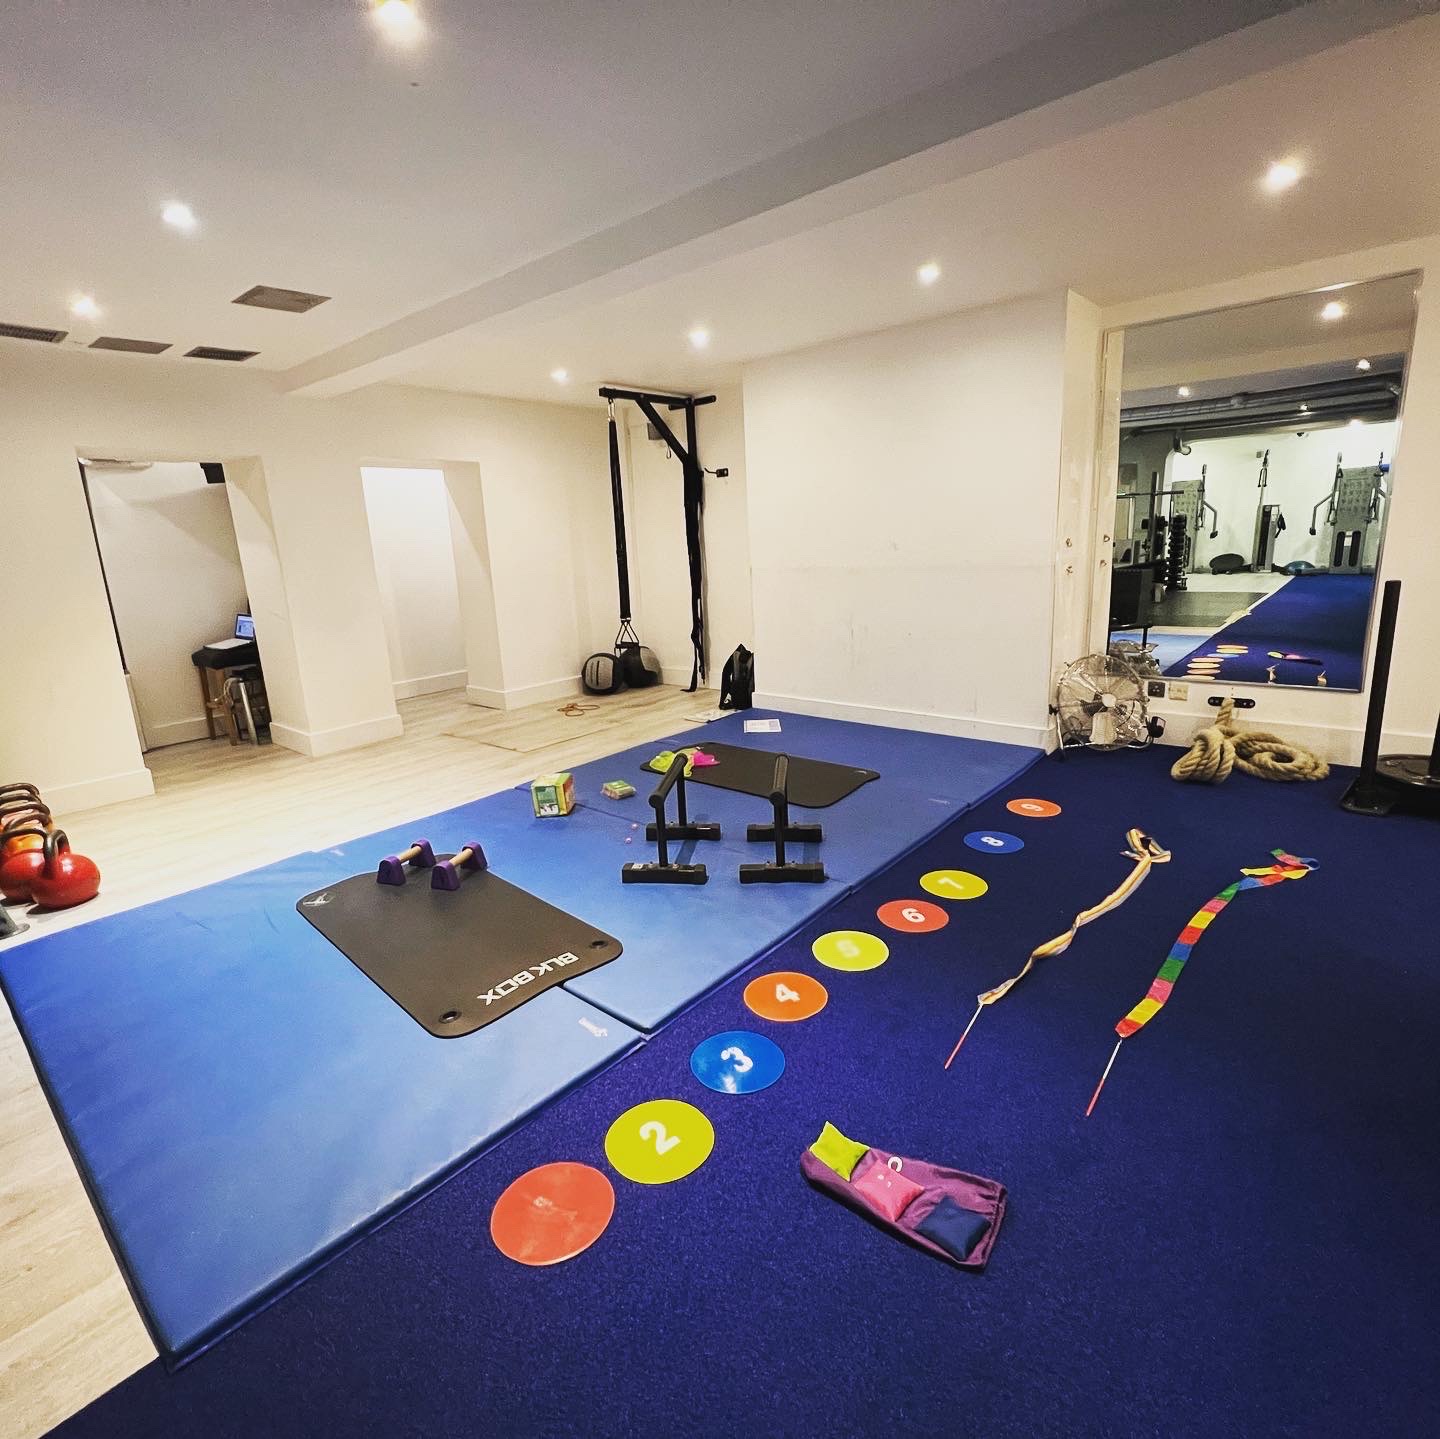 Gymnastics lessons for children at the Kensington Studio in Kensington and Chelsea